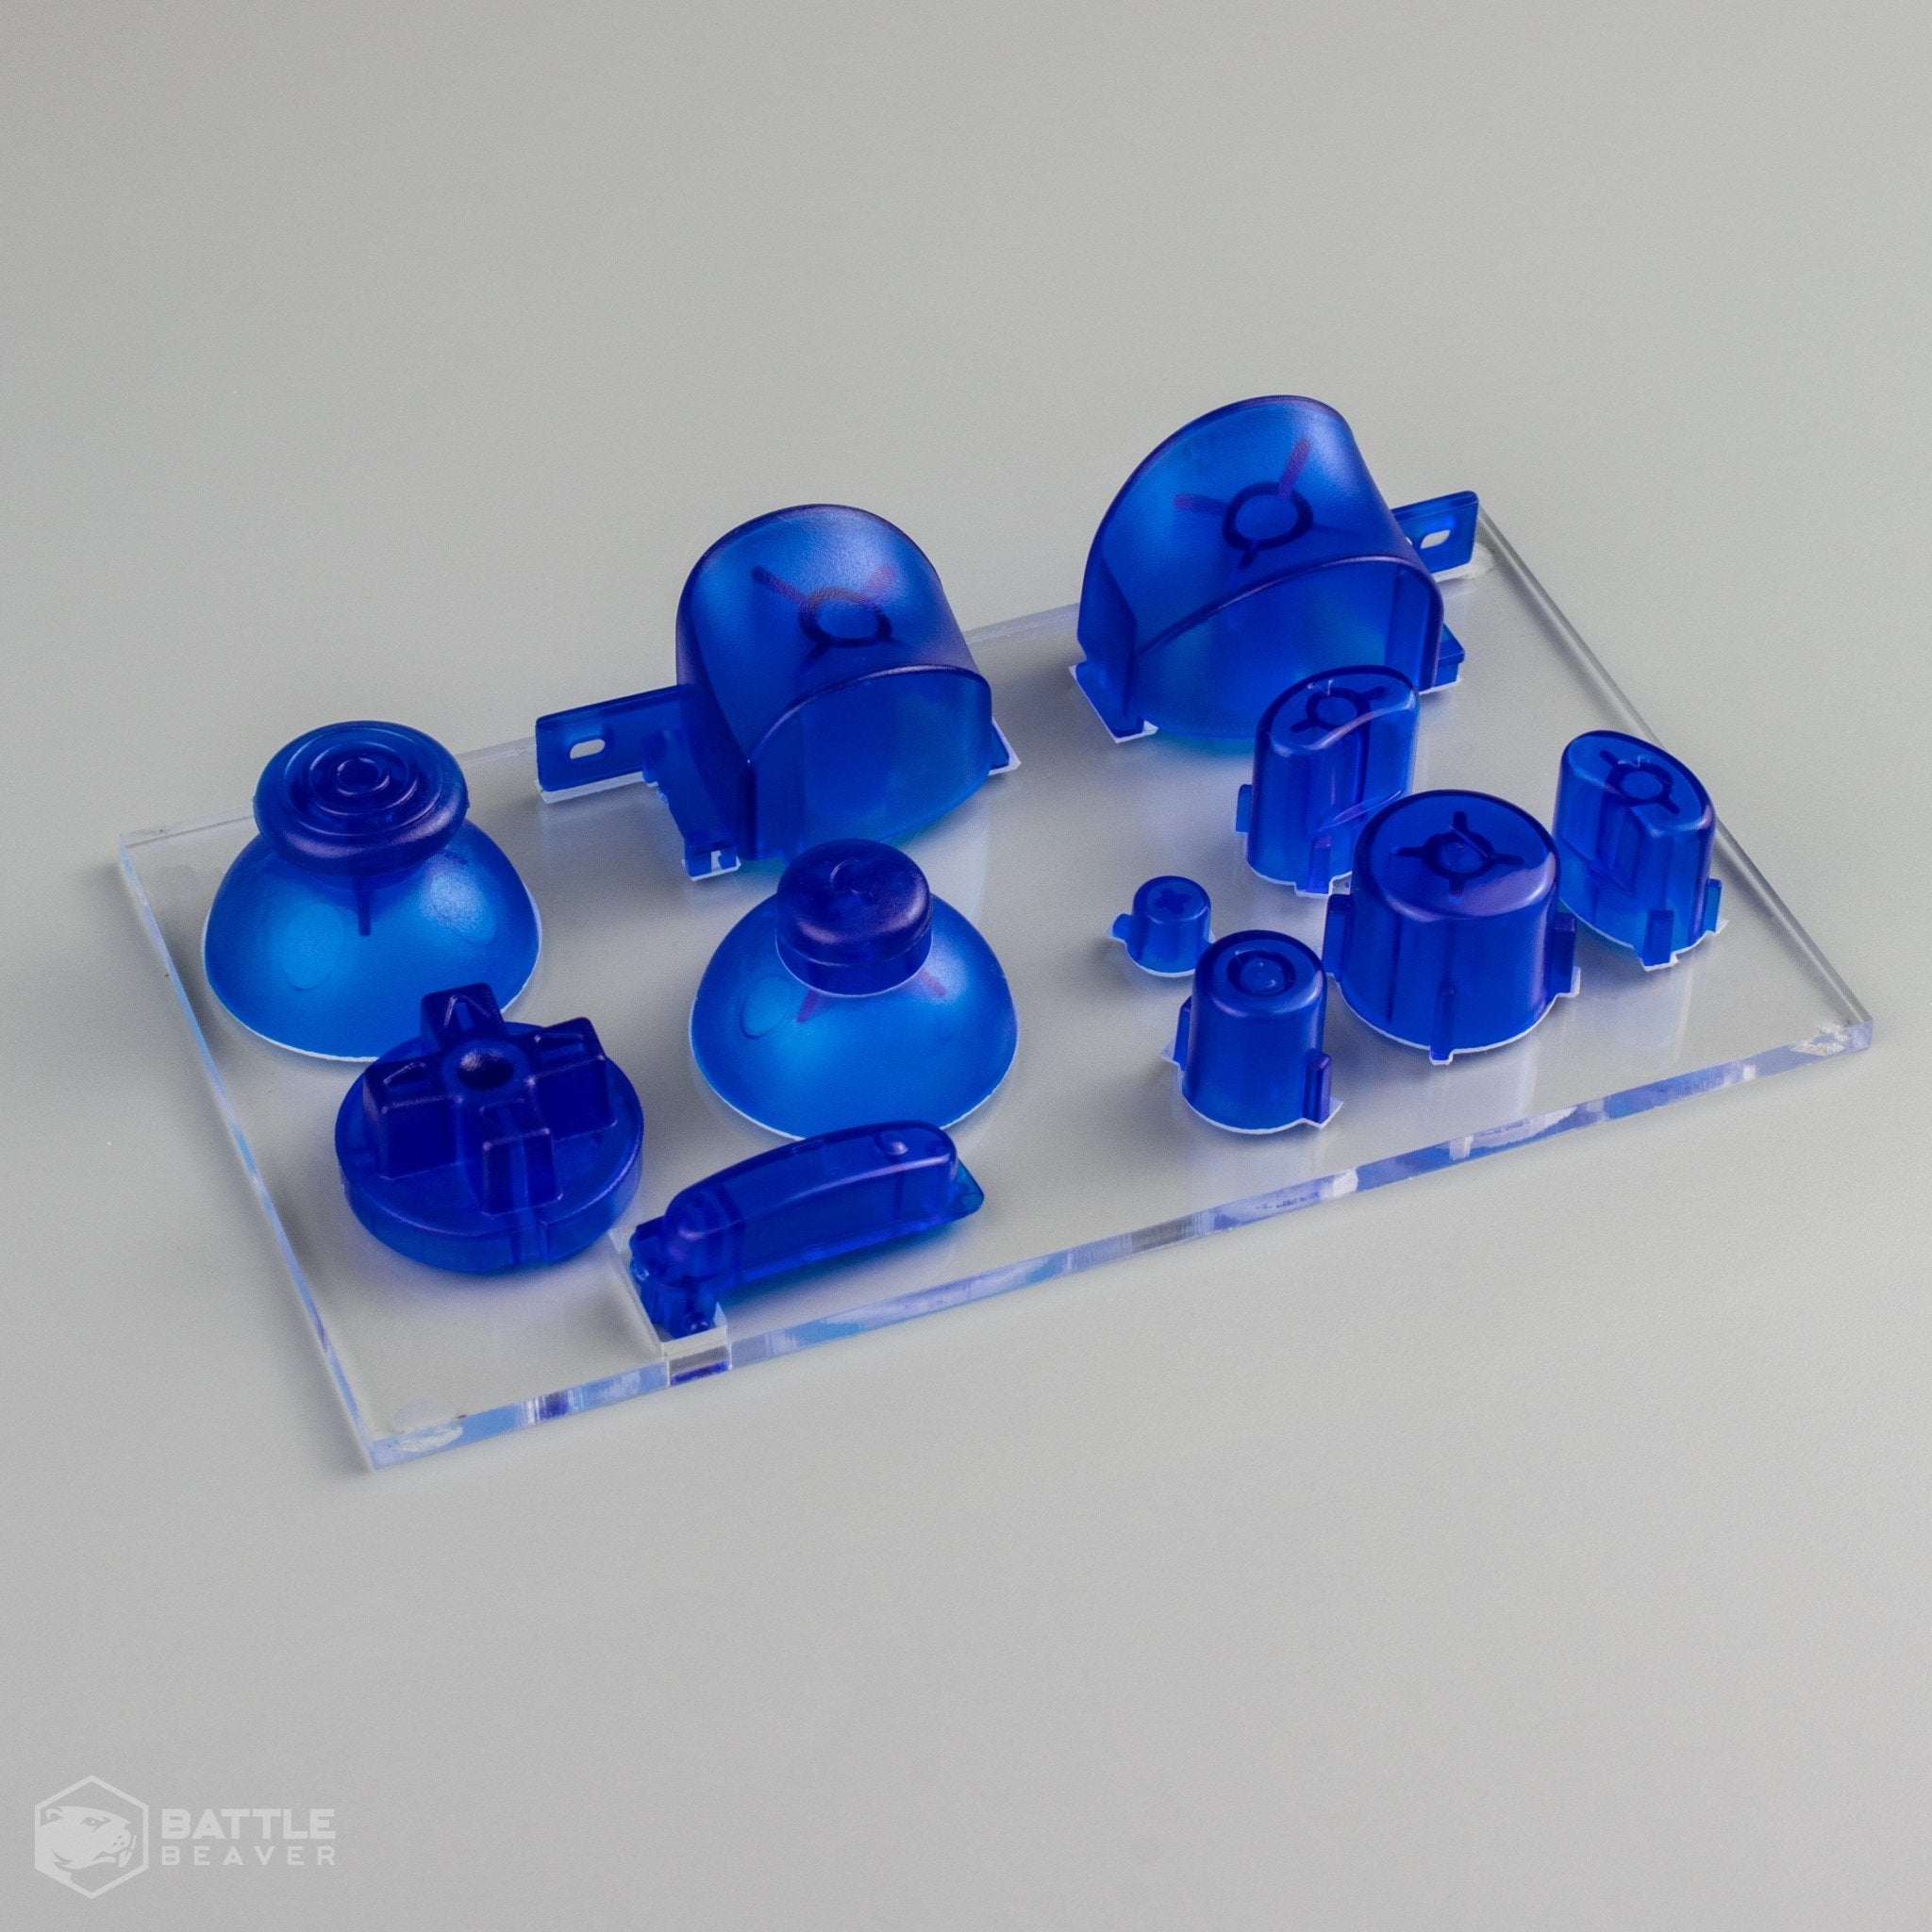 3rd Party Gamecube Parts Kit - Battle Beaver Customs - Crystal Blue